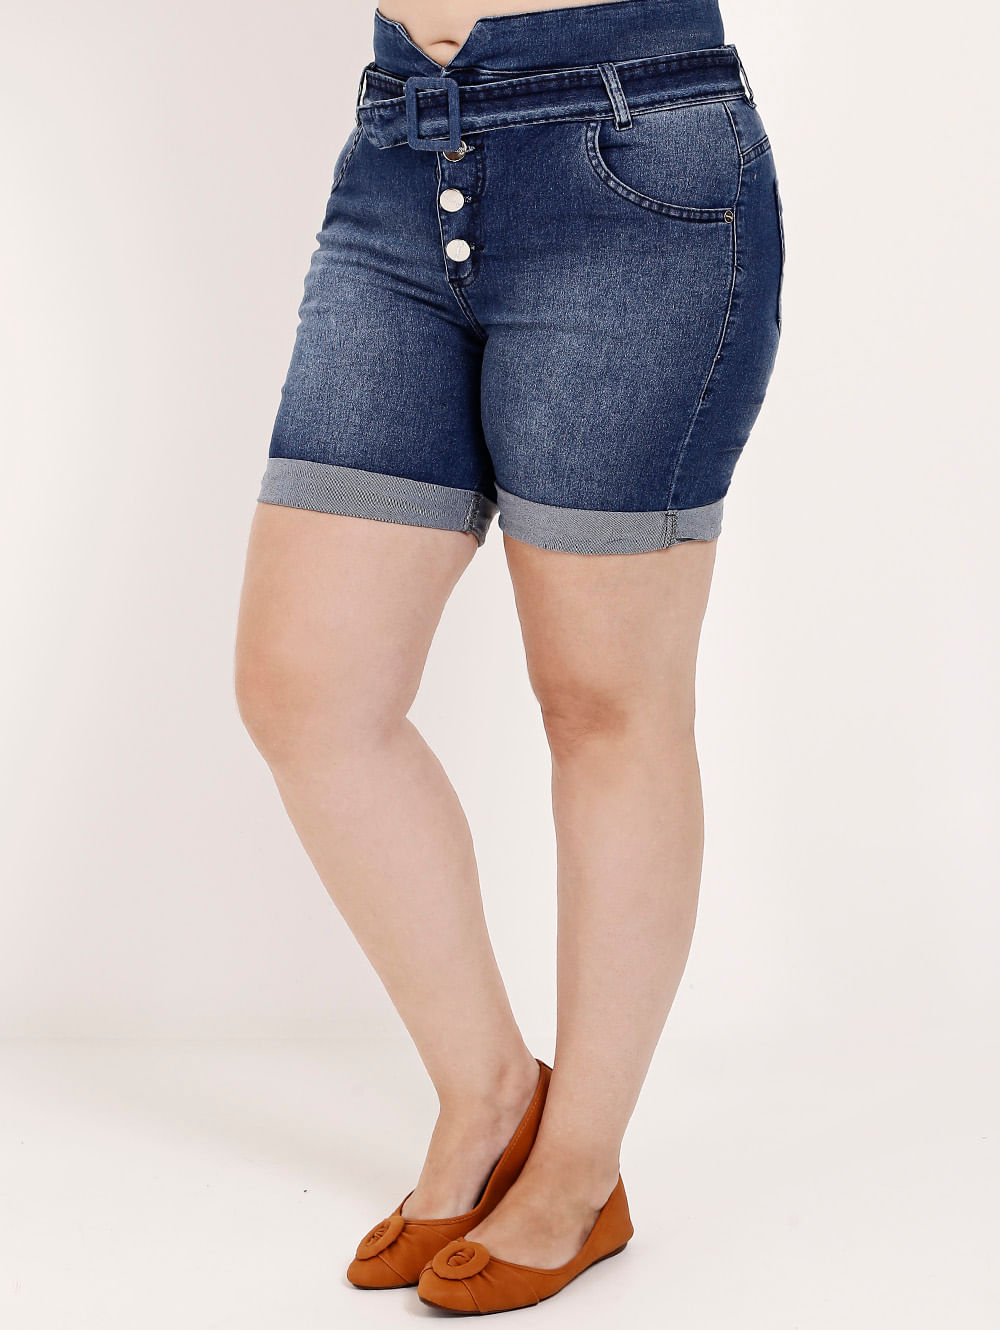 bermudas jeans feminina cintura alta